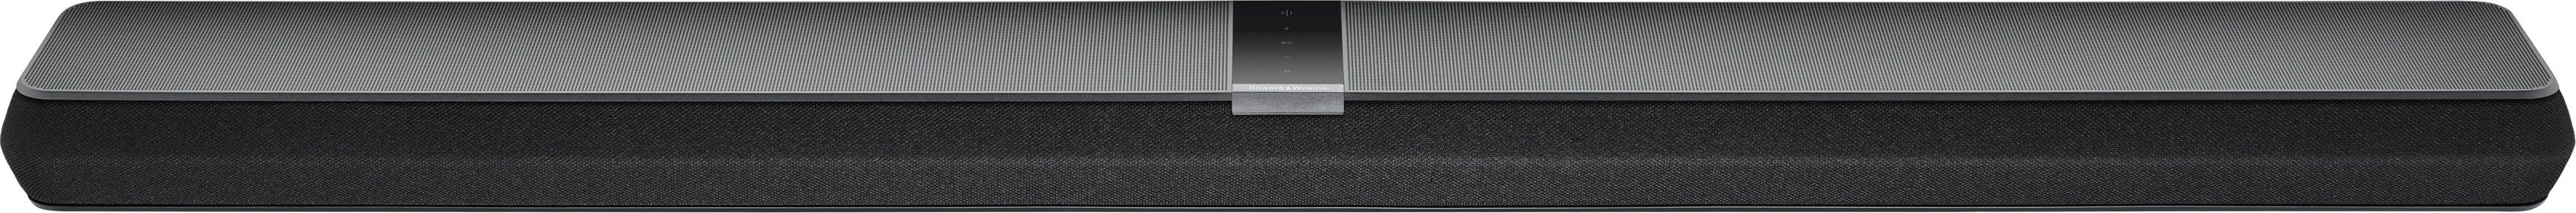 Bowers & Wilkins Panorama 3 3.1.2 Atmos, Bluetooth, Wireless W, (aptX Soundbar Dolby Airplay 2) 400